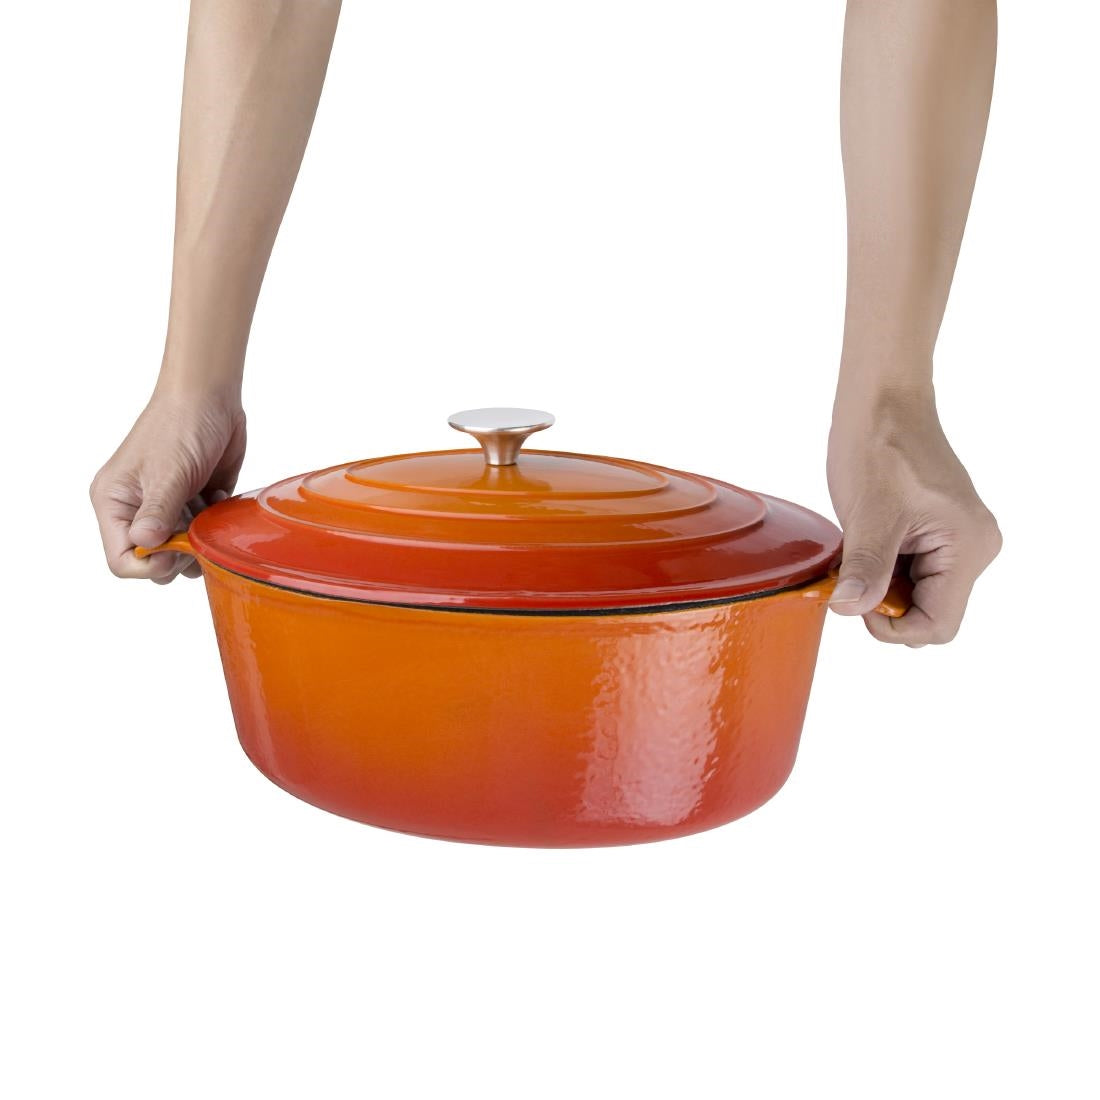 GH312 Vogue Orange Oval Casserole Dish 6Ltr JD Catering Equipment Solutions Ltd